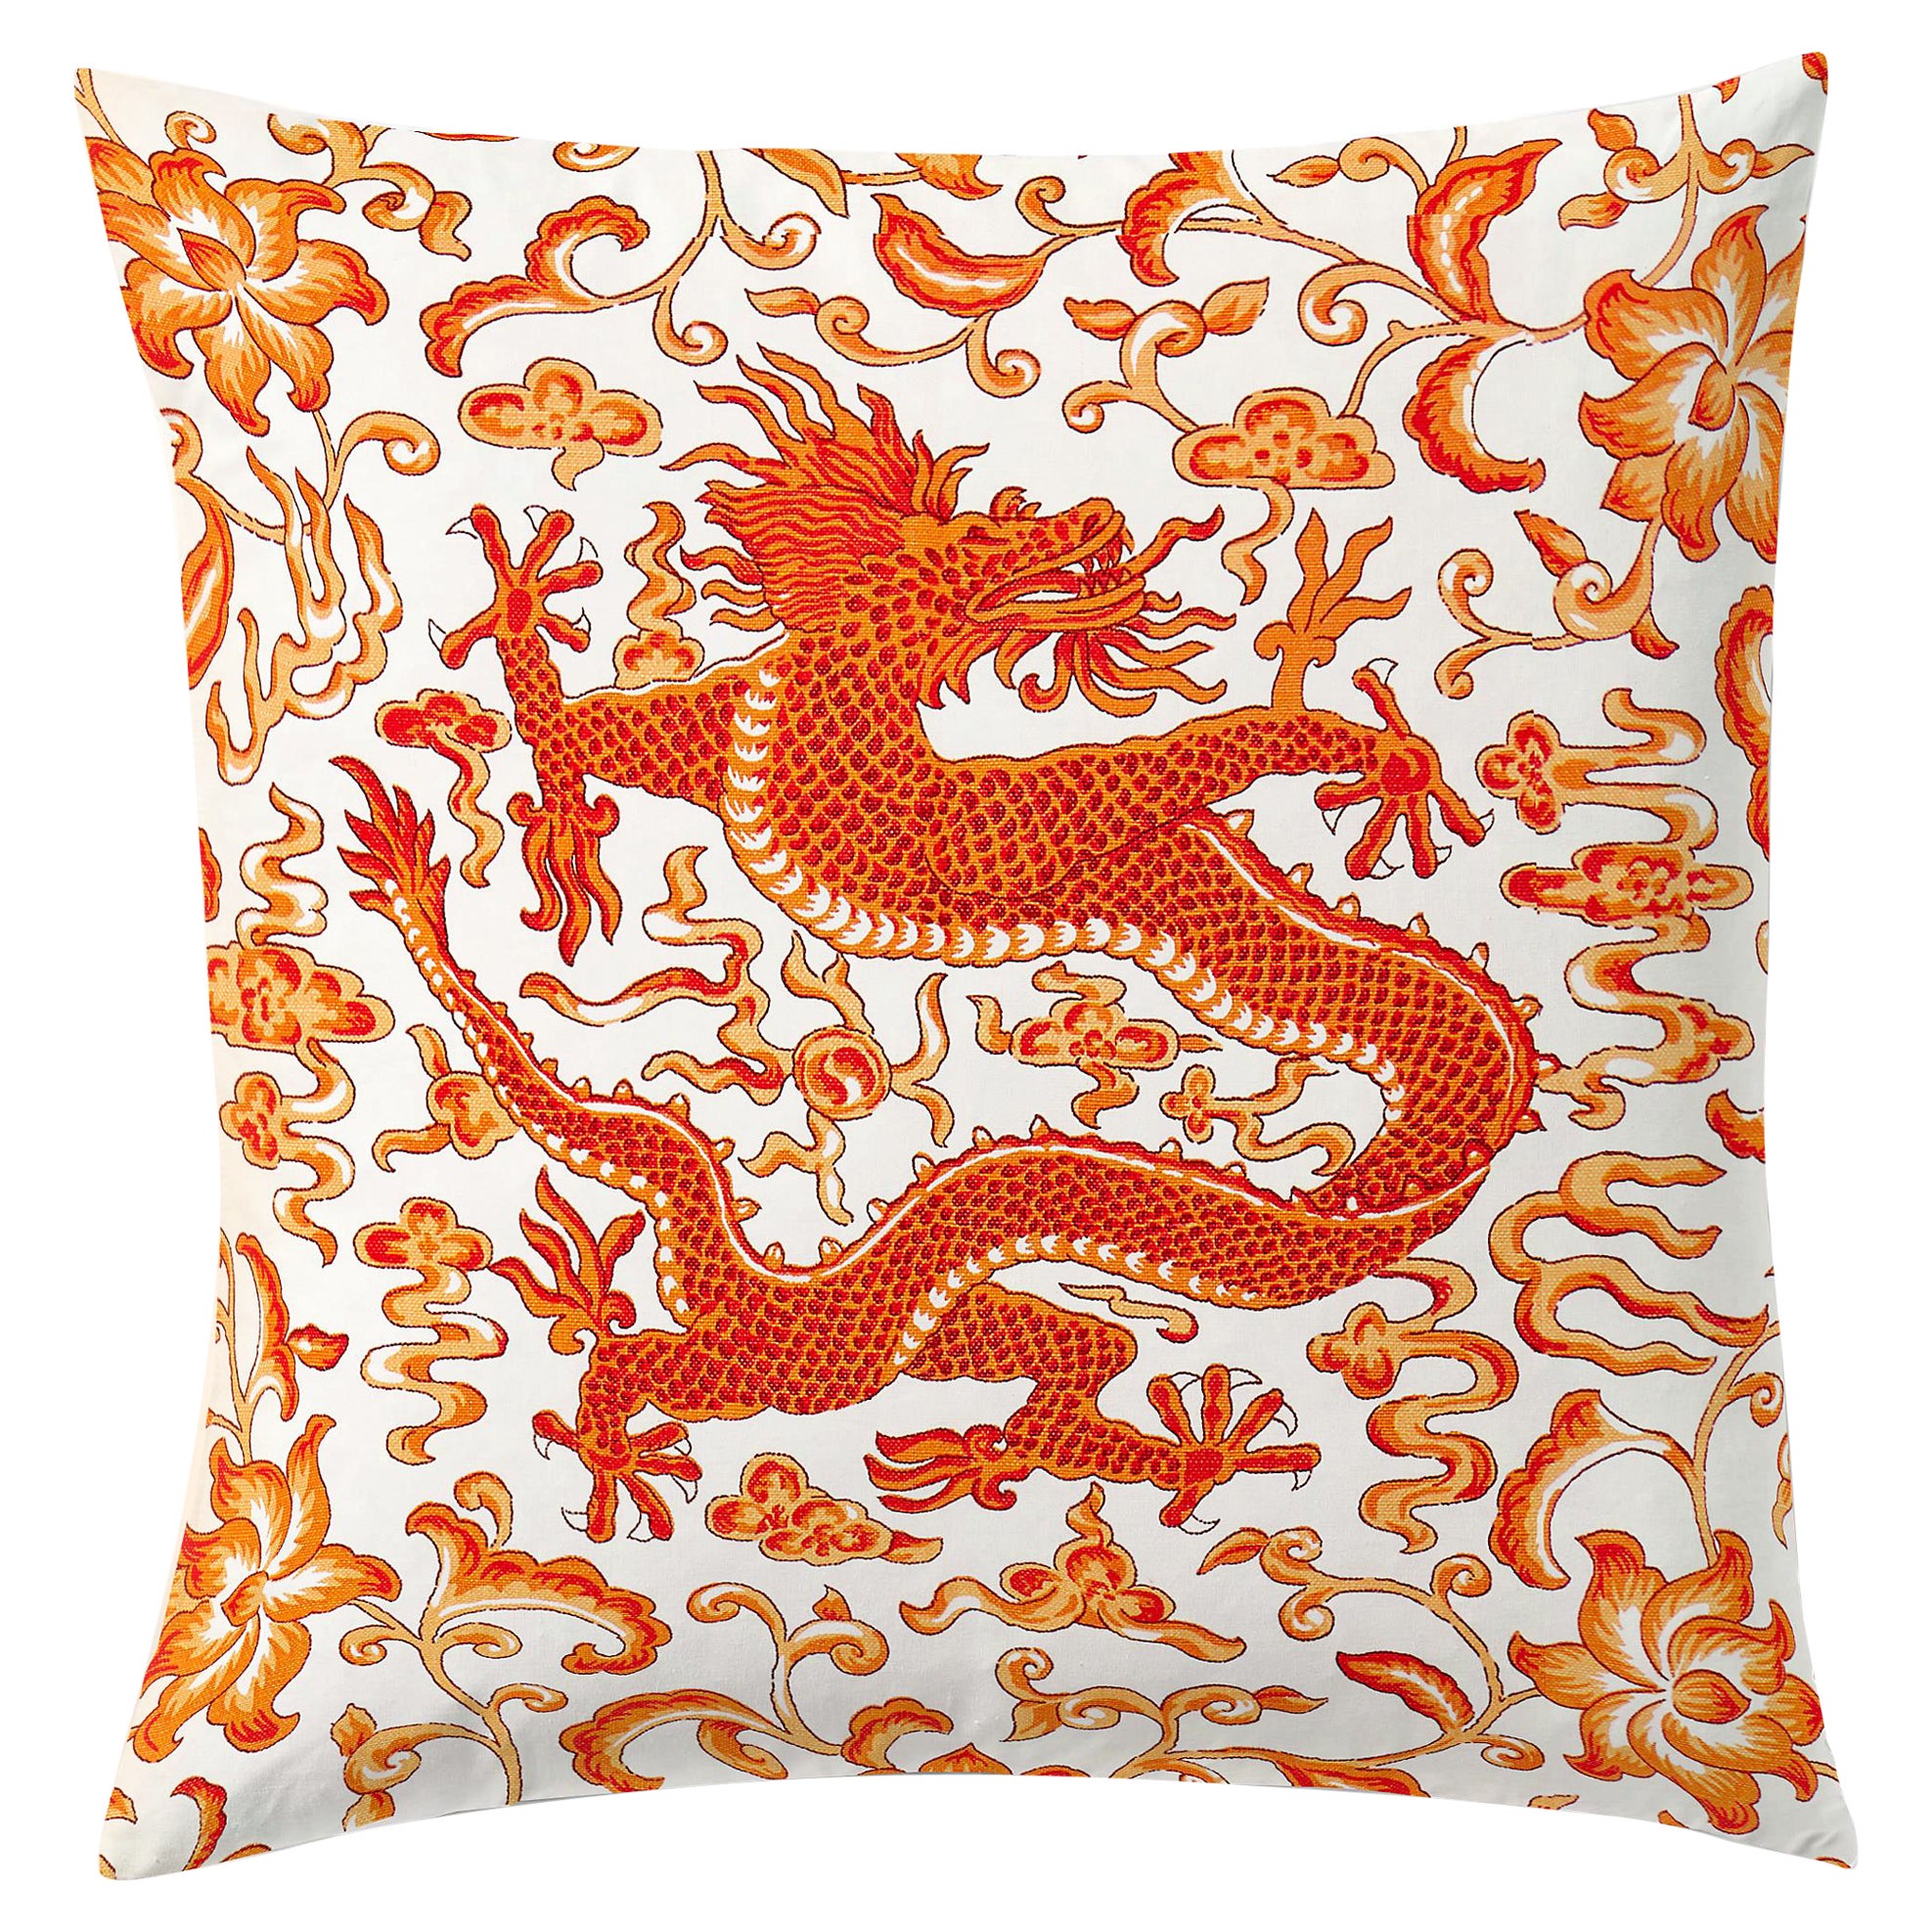 Chi'En Dragon Pillow For Sale